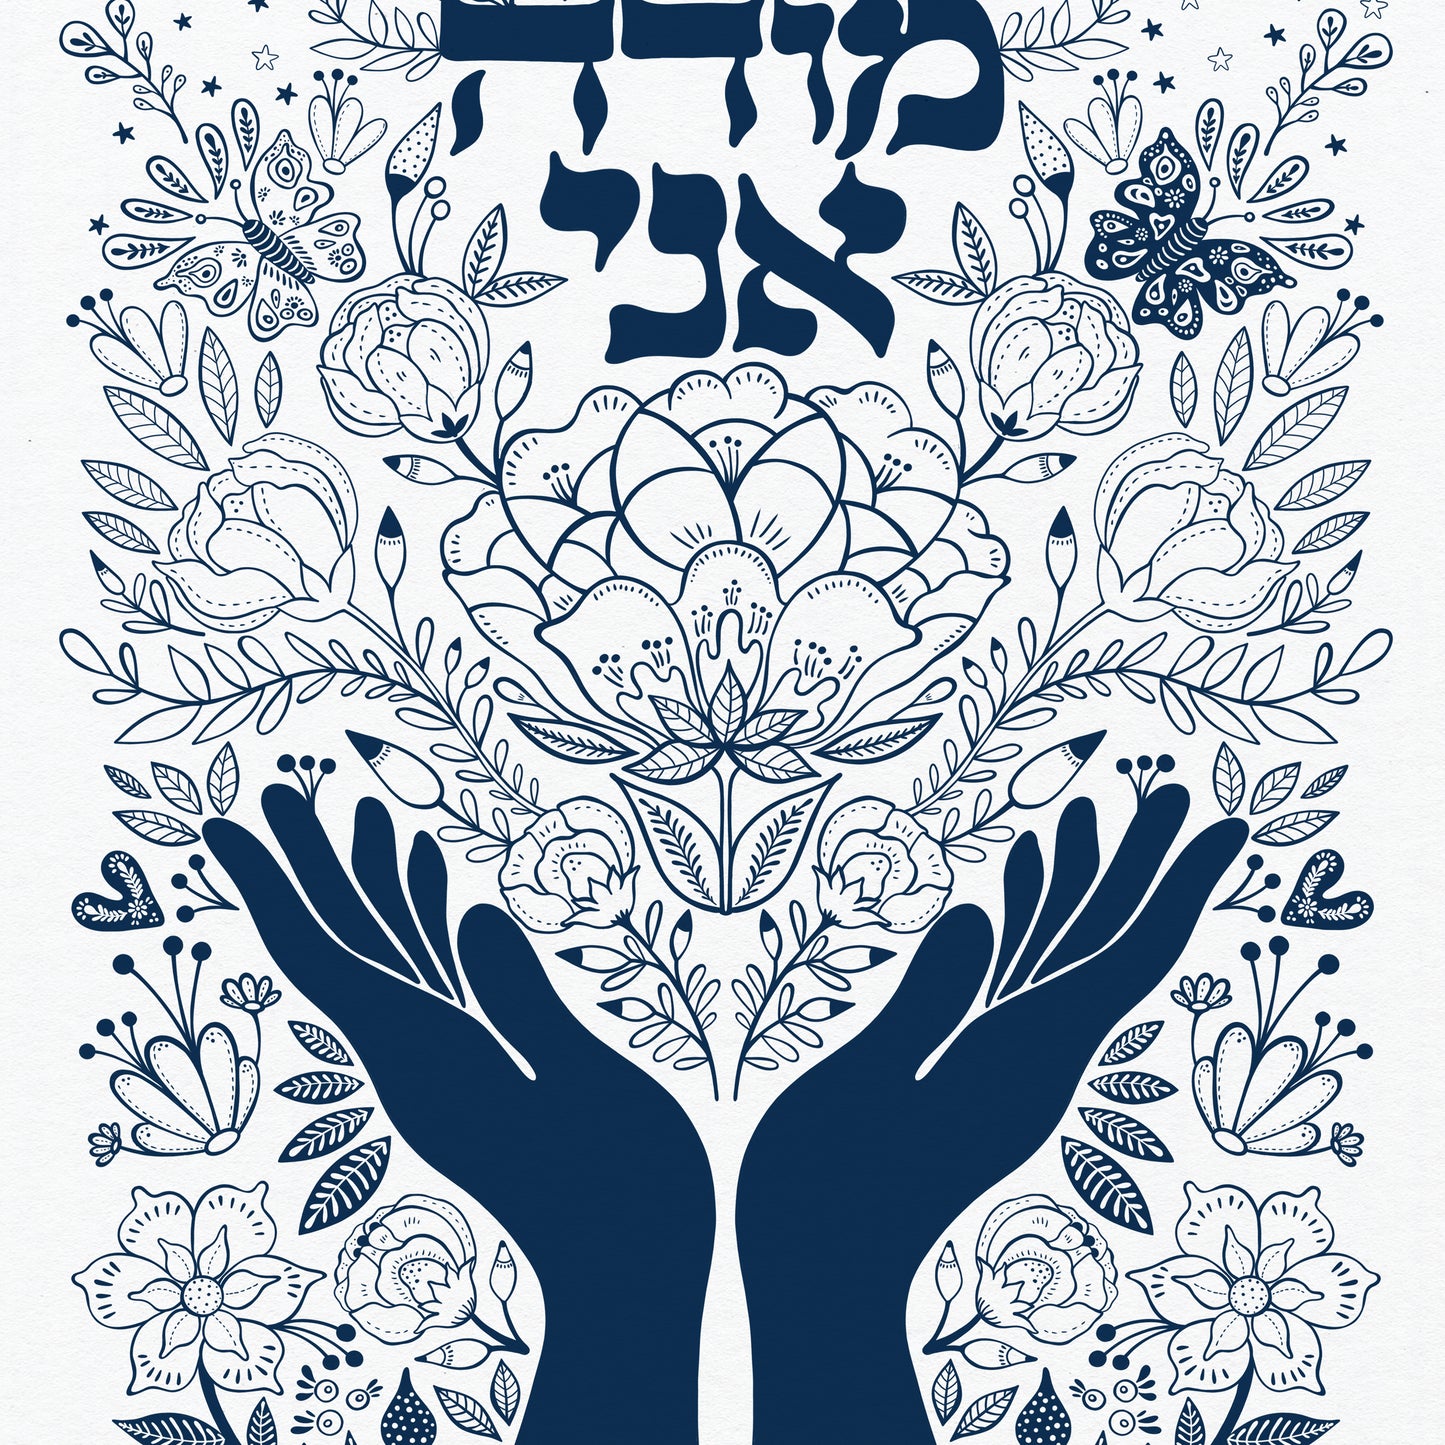 Modeh Ani - I give thanks - מודה אני - Art Print blue on white